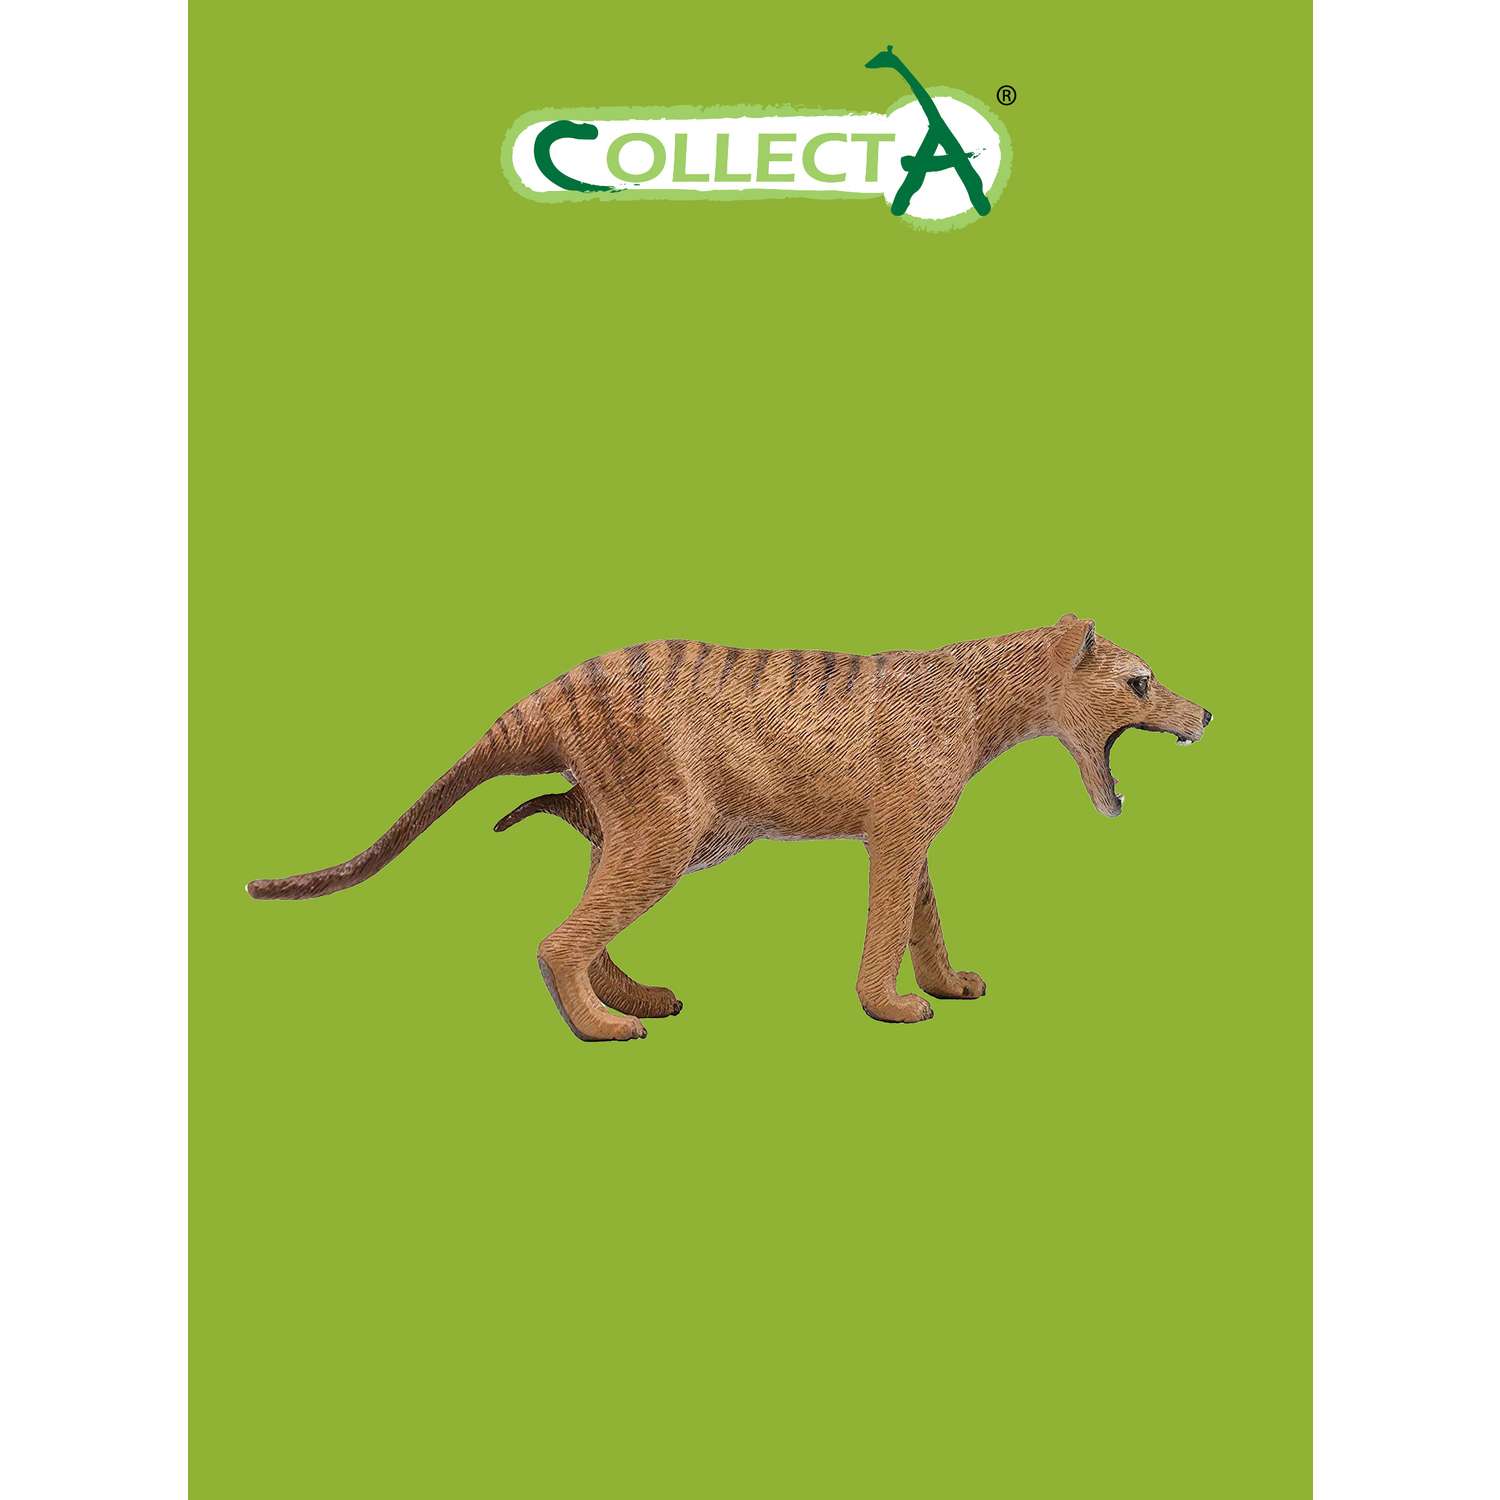 Игрушка Collecta Тасманская волчица фигурка животного - фото 1